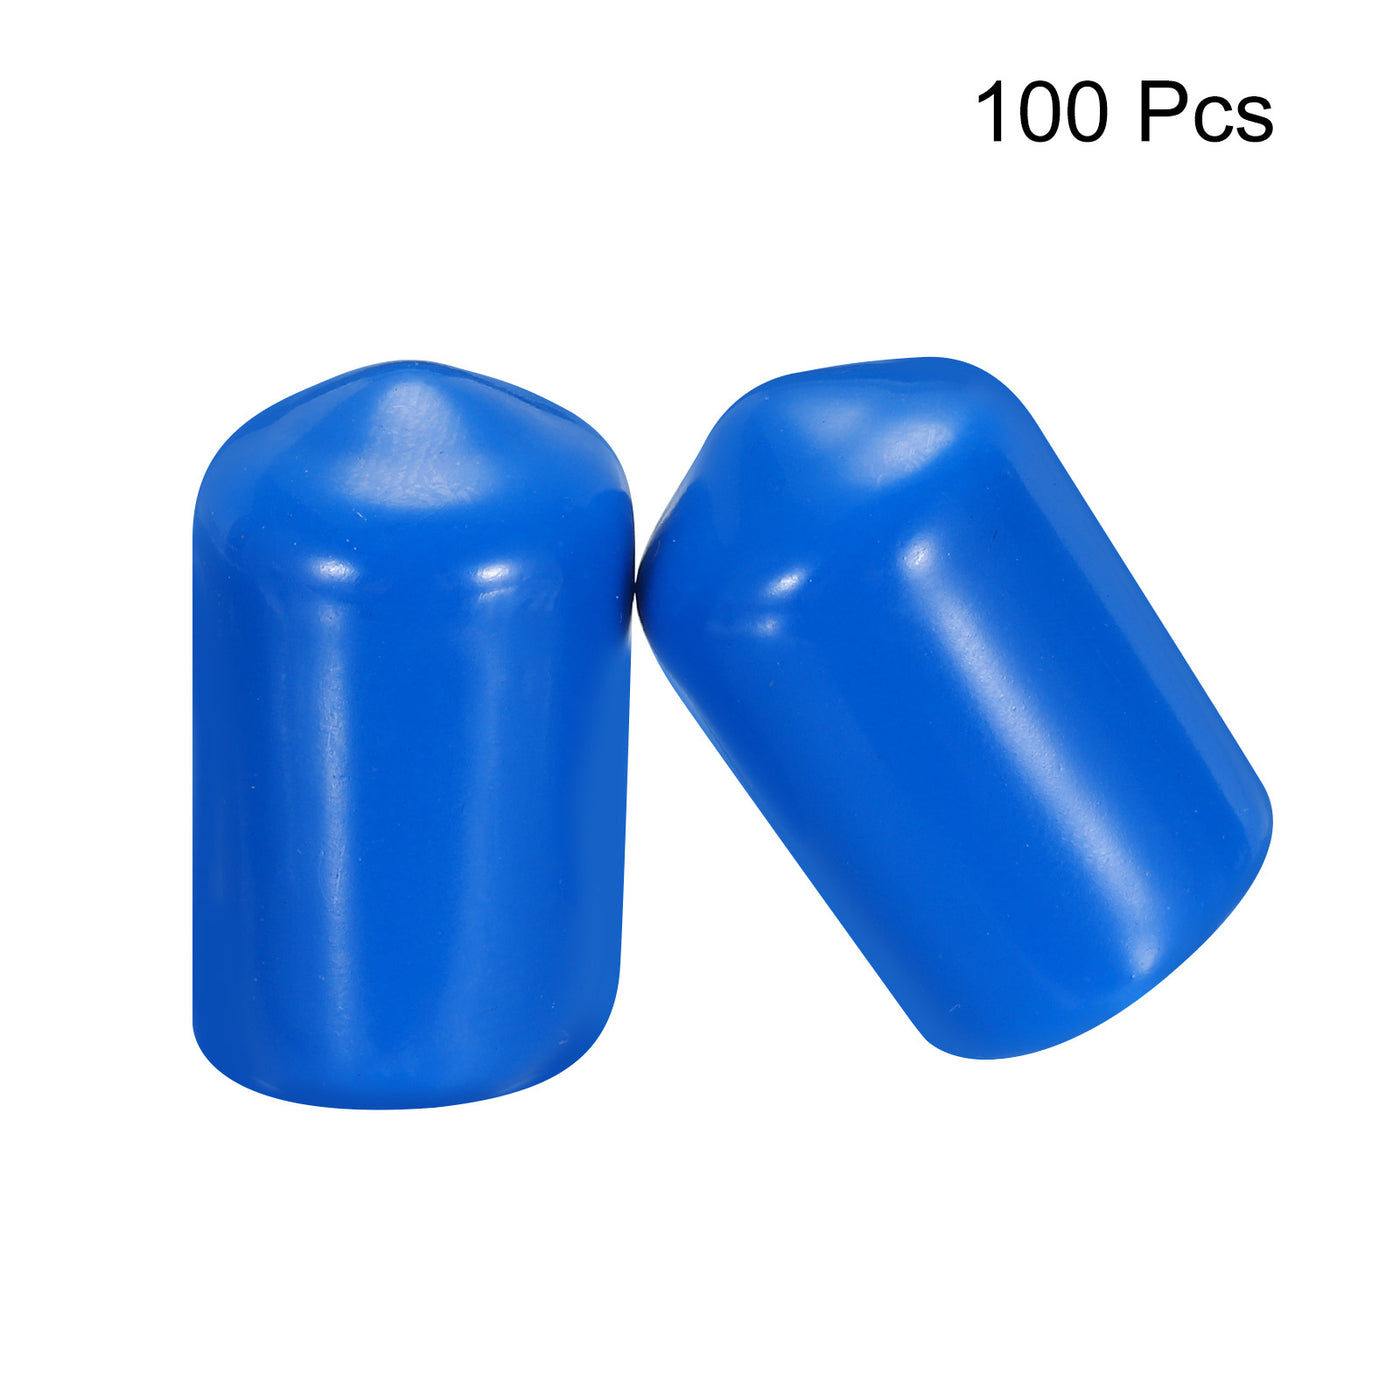 uxcell Uxcell 100pcs Rubber End Caps 14mm ID Vinyl PVC Round Tube Bolt Cap Cover Screw Thread Protectors Blue